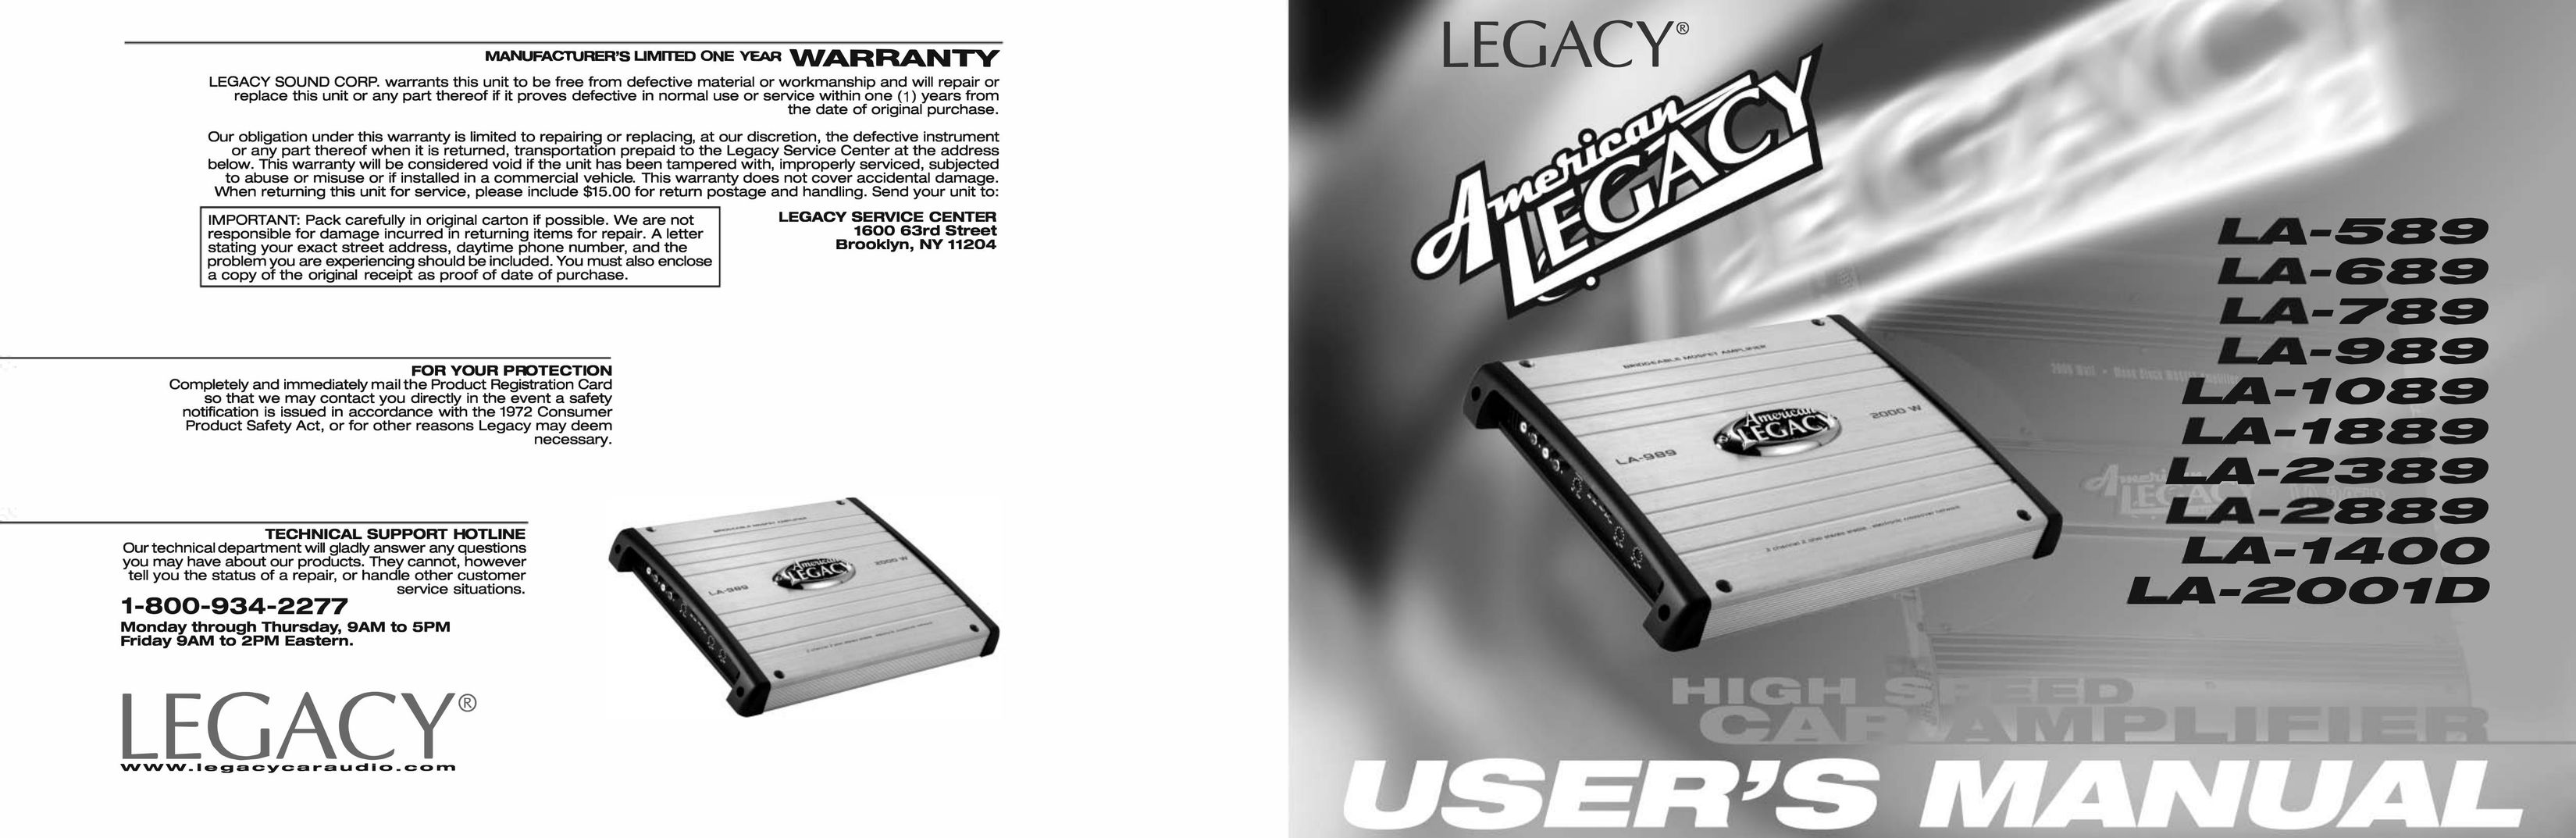 Legacy Car Audio LA-2389 Car Amplifier User Manual